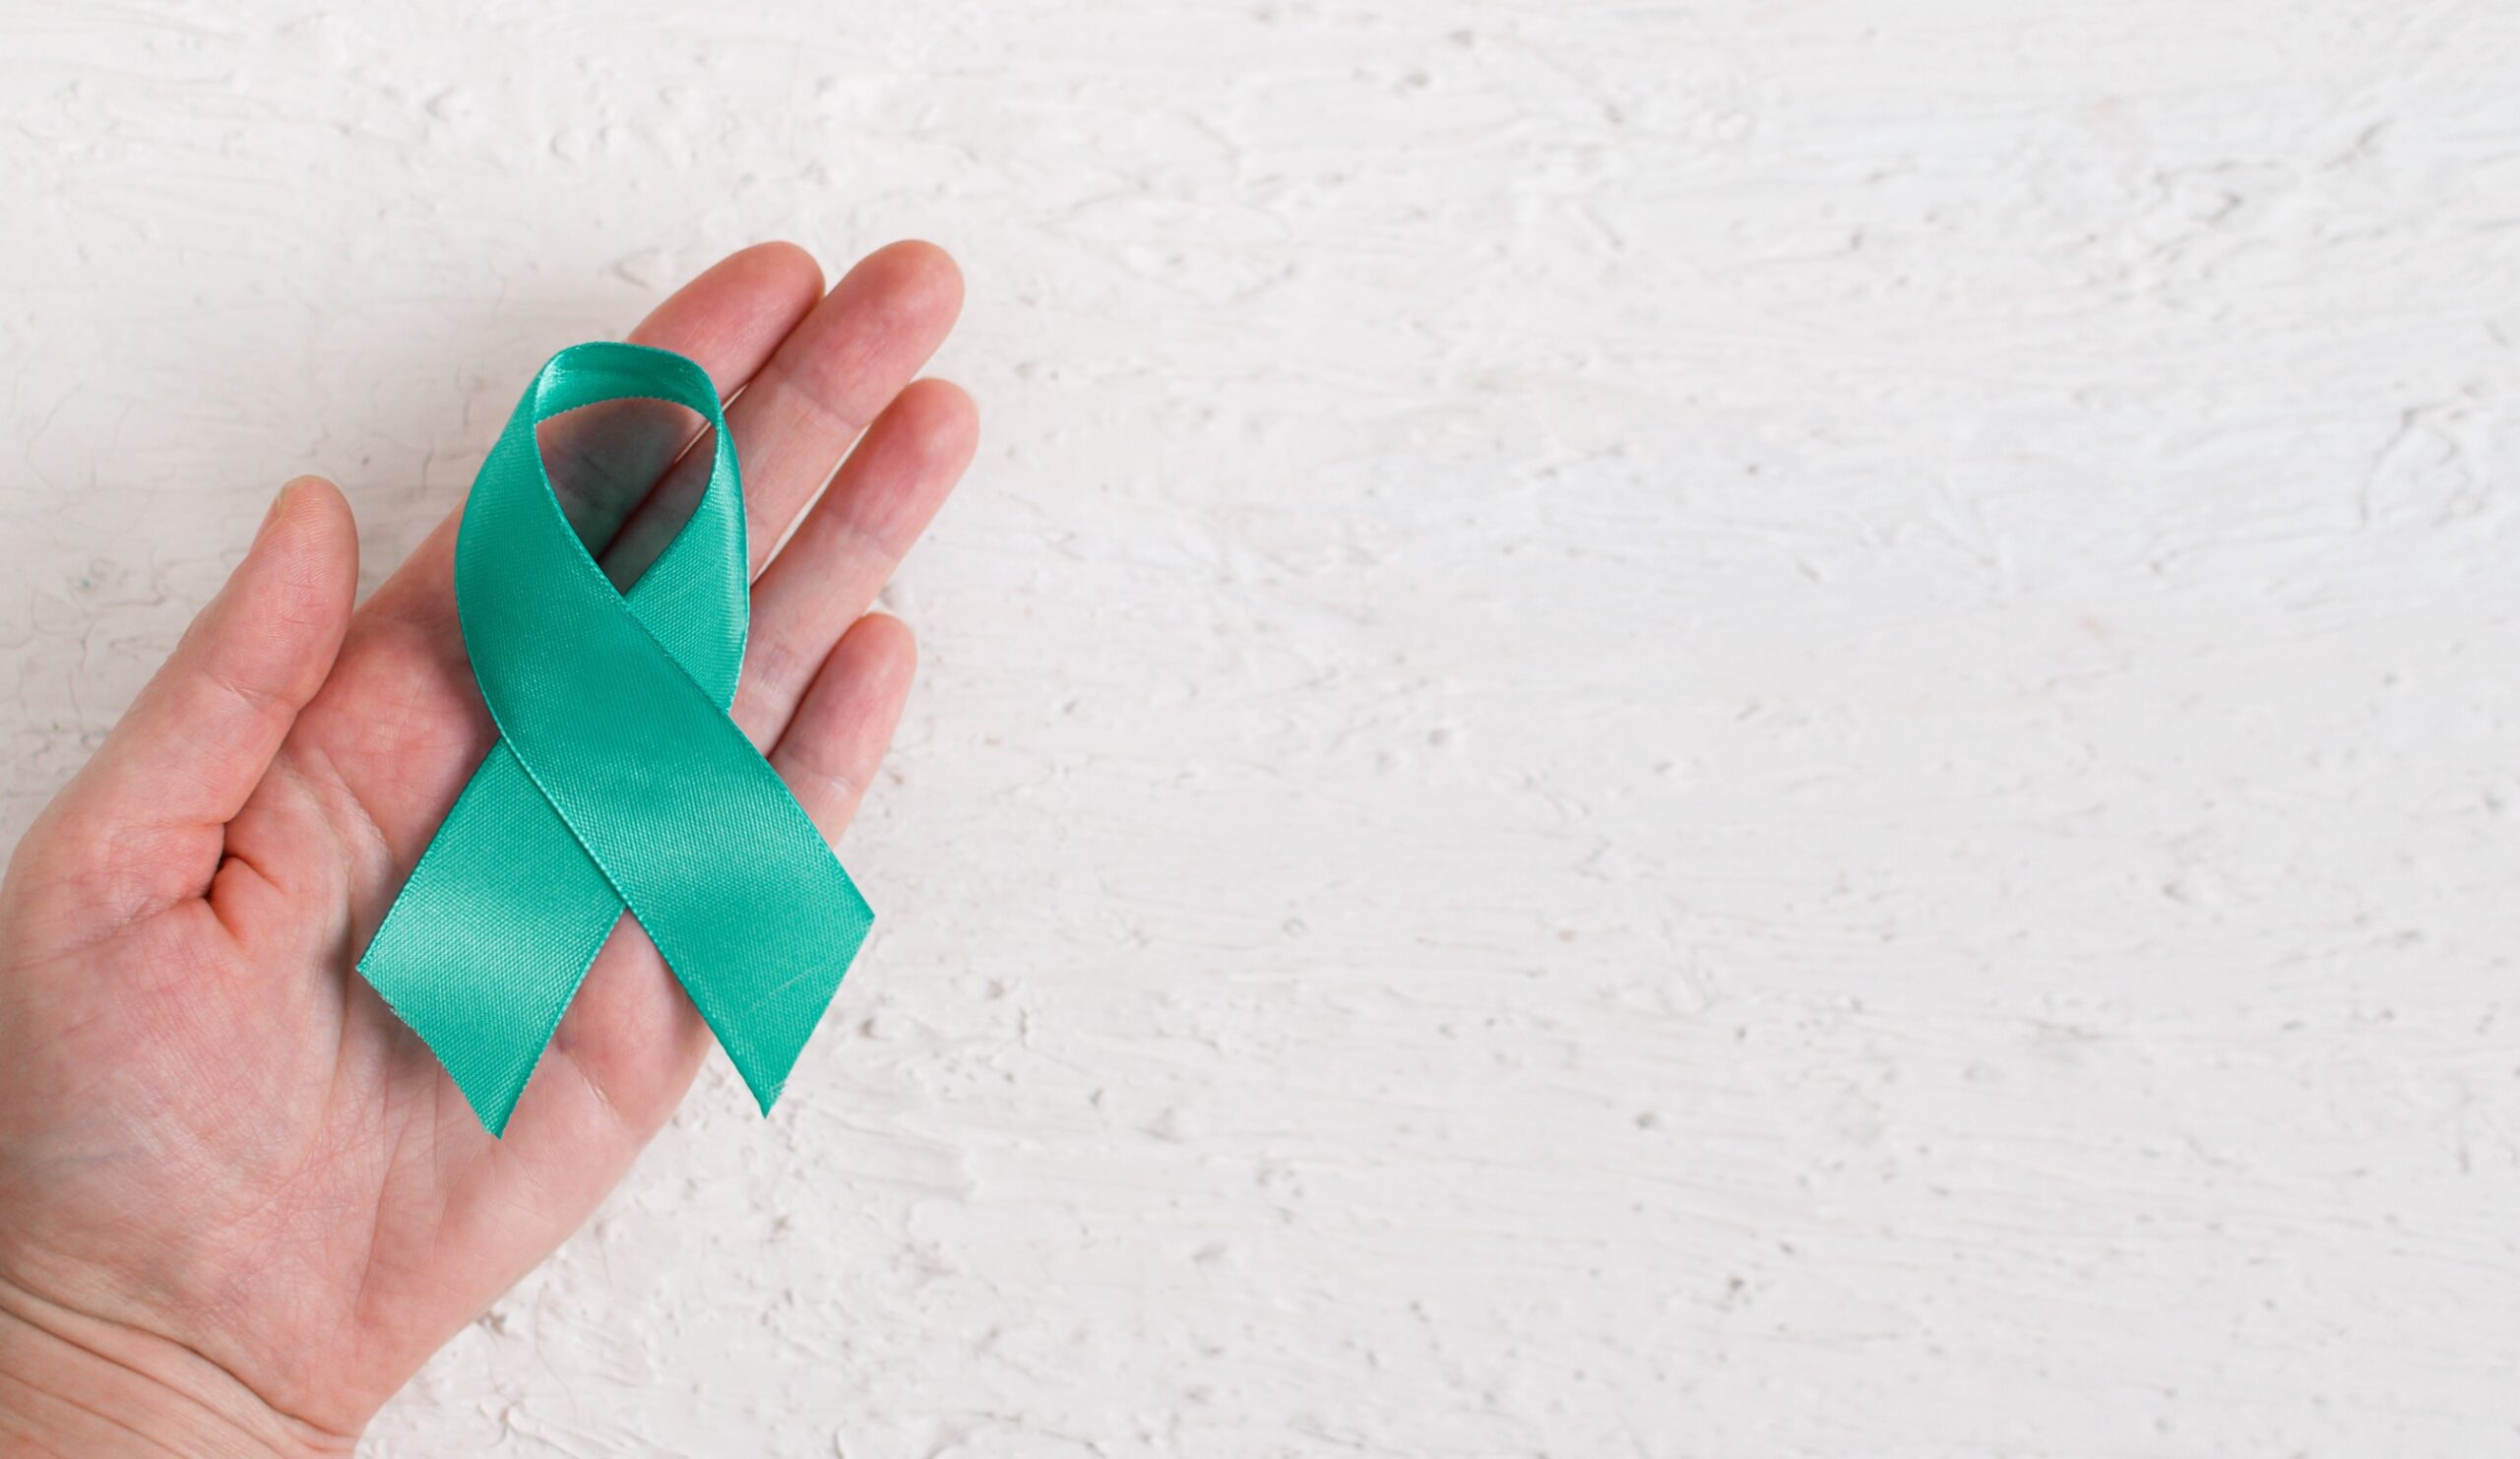 Cervical Cancer: Causes, symptoms, myths & facts & more